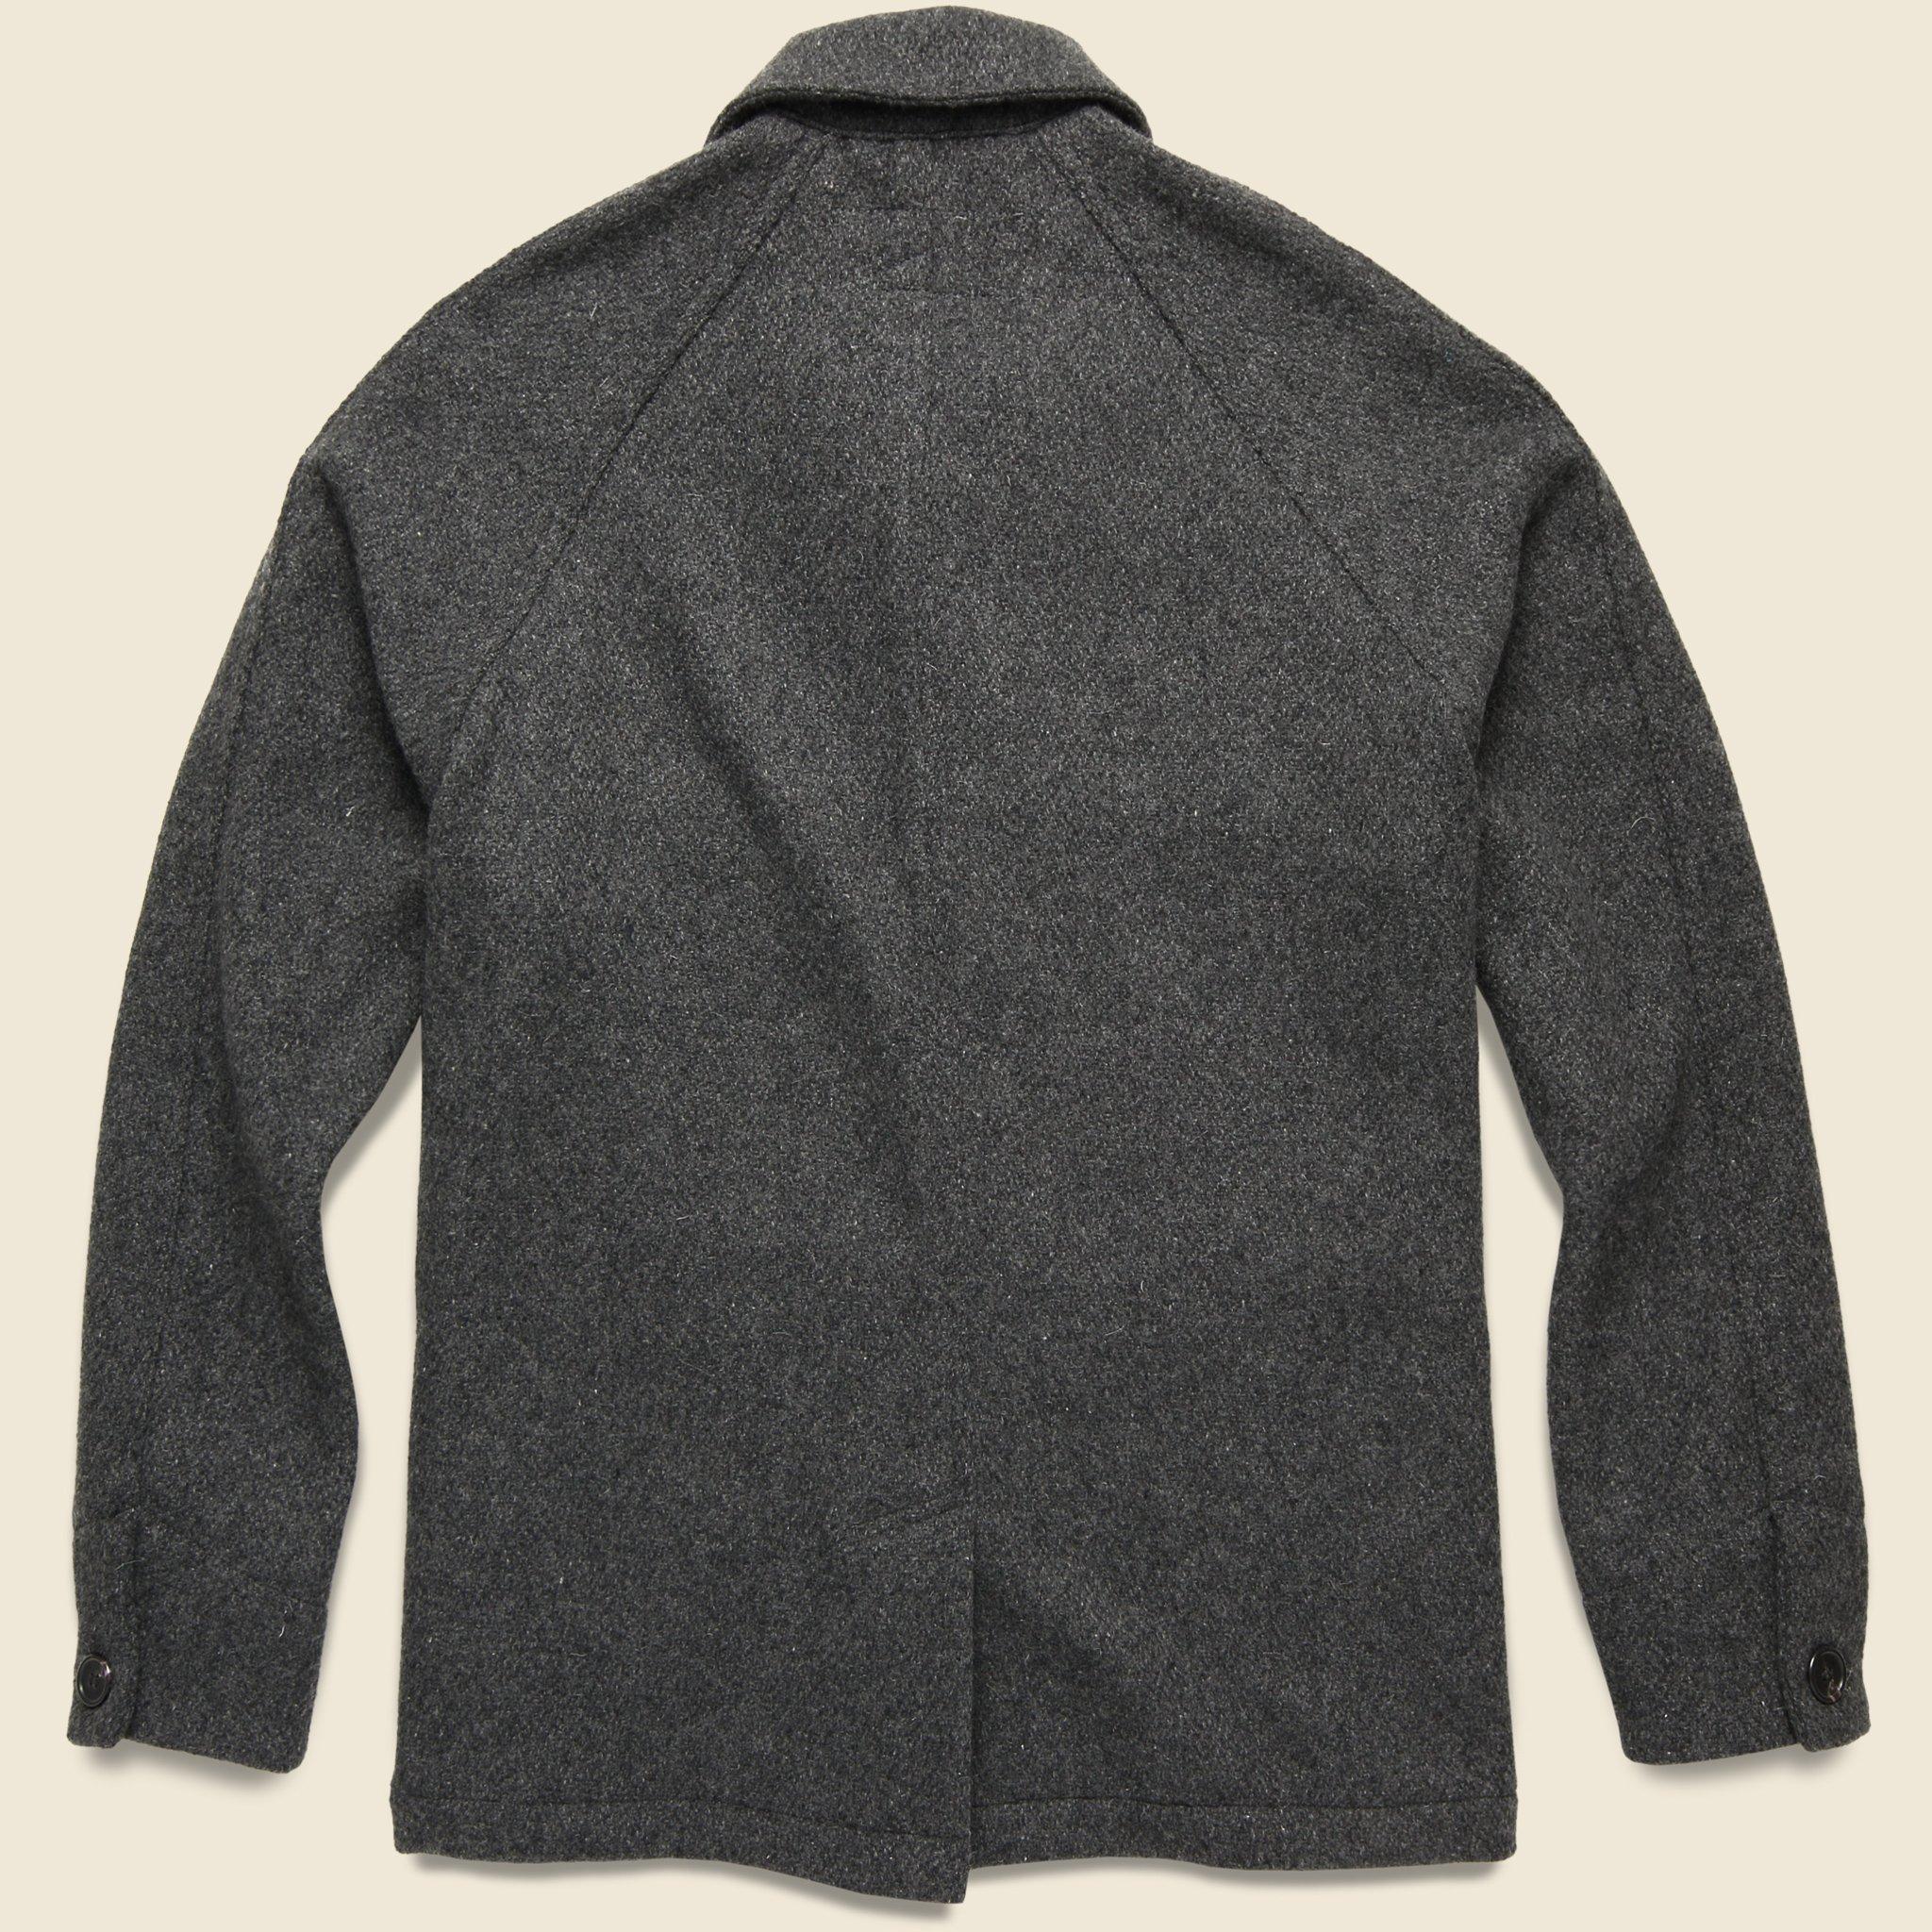 Rogue Territory Wool Explorer Jacket in Grey (Gray) for Men - Lyst